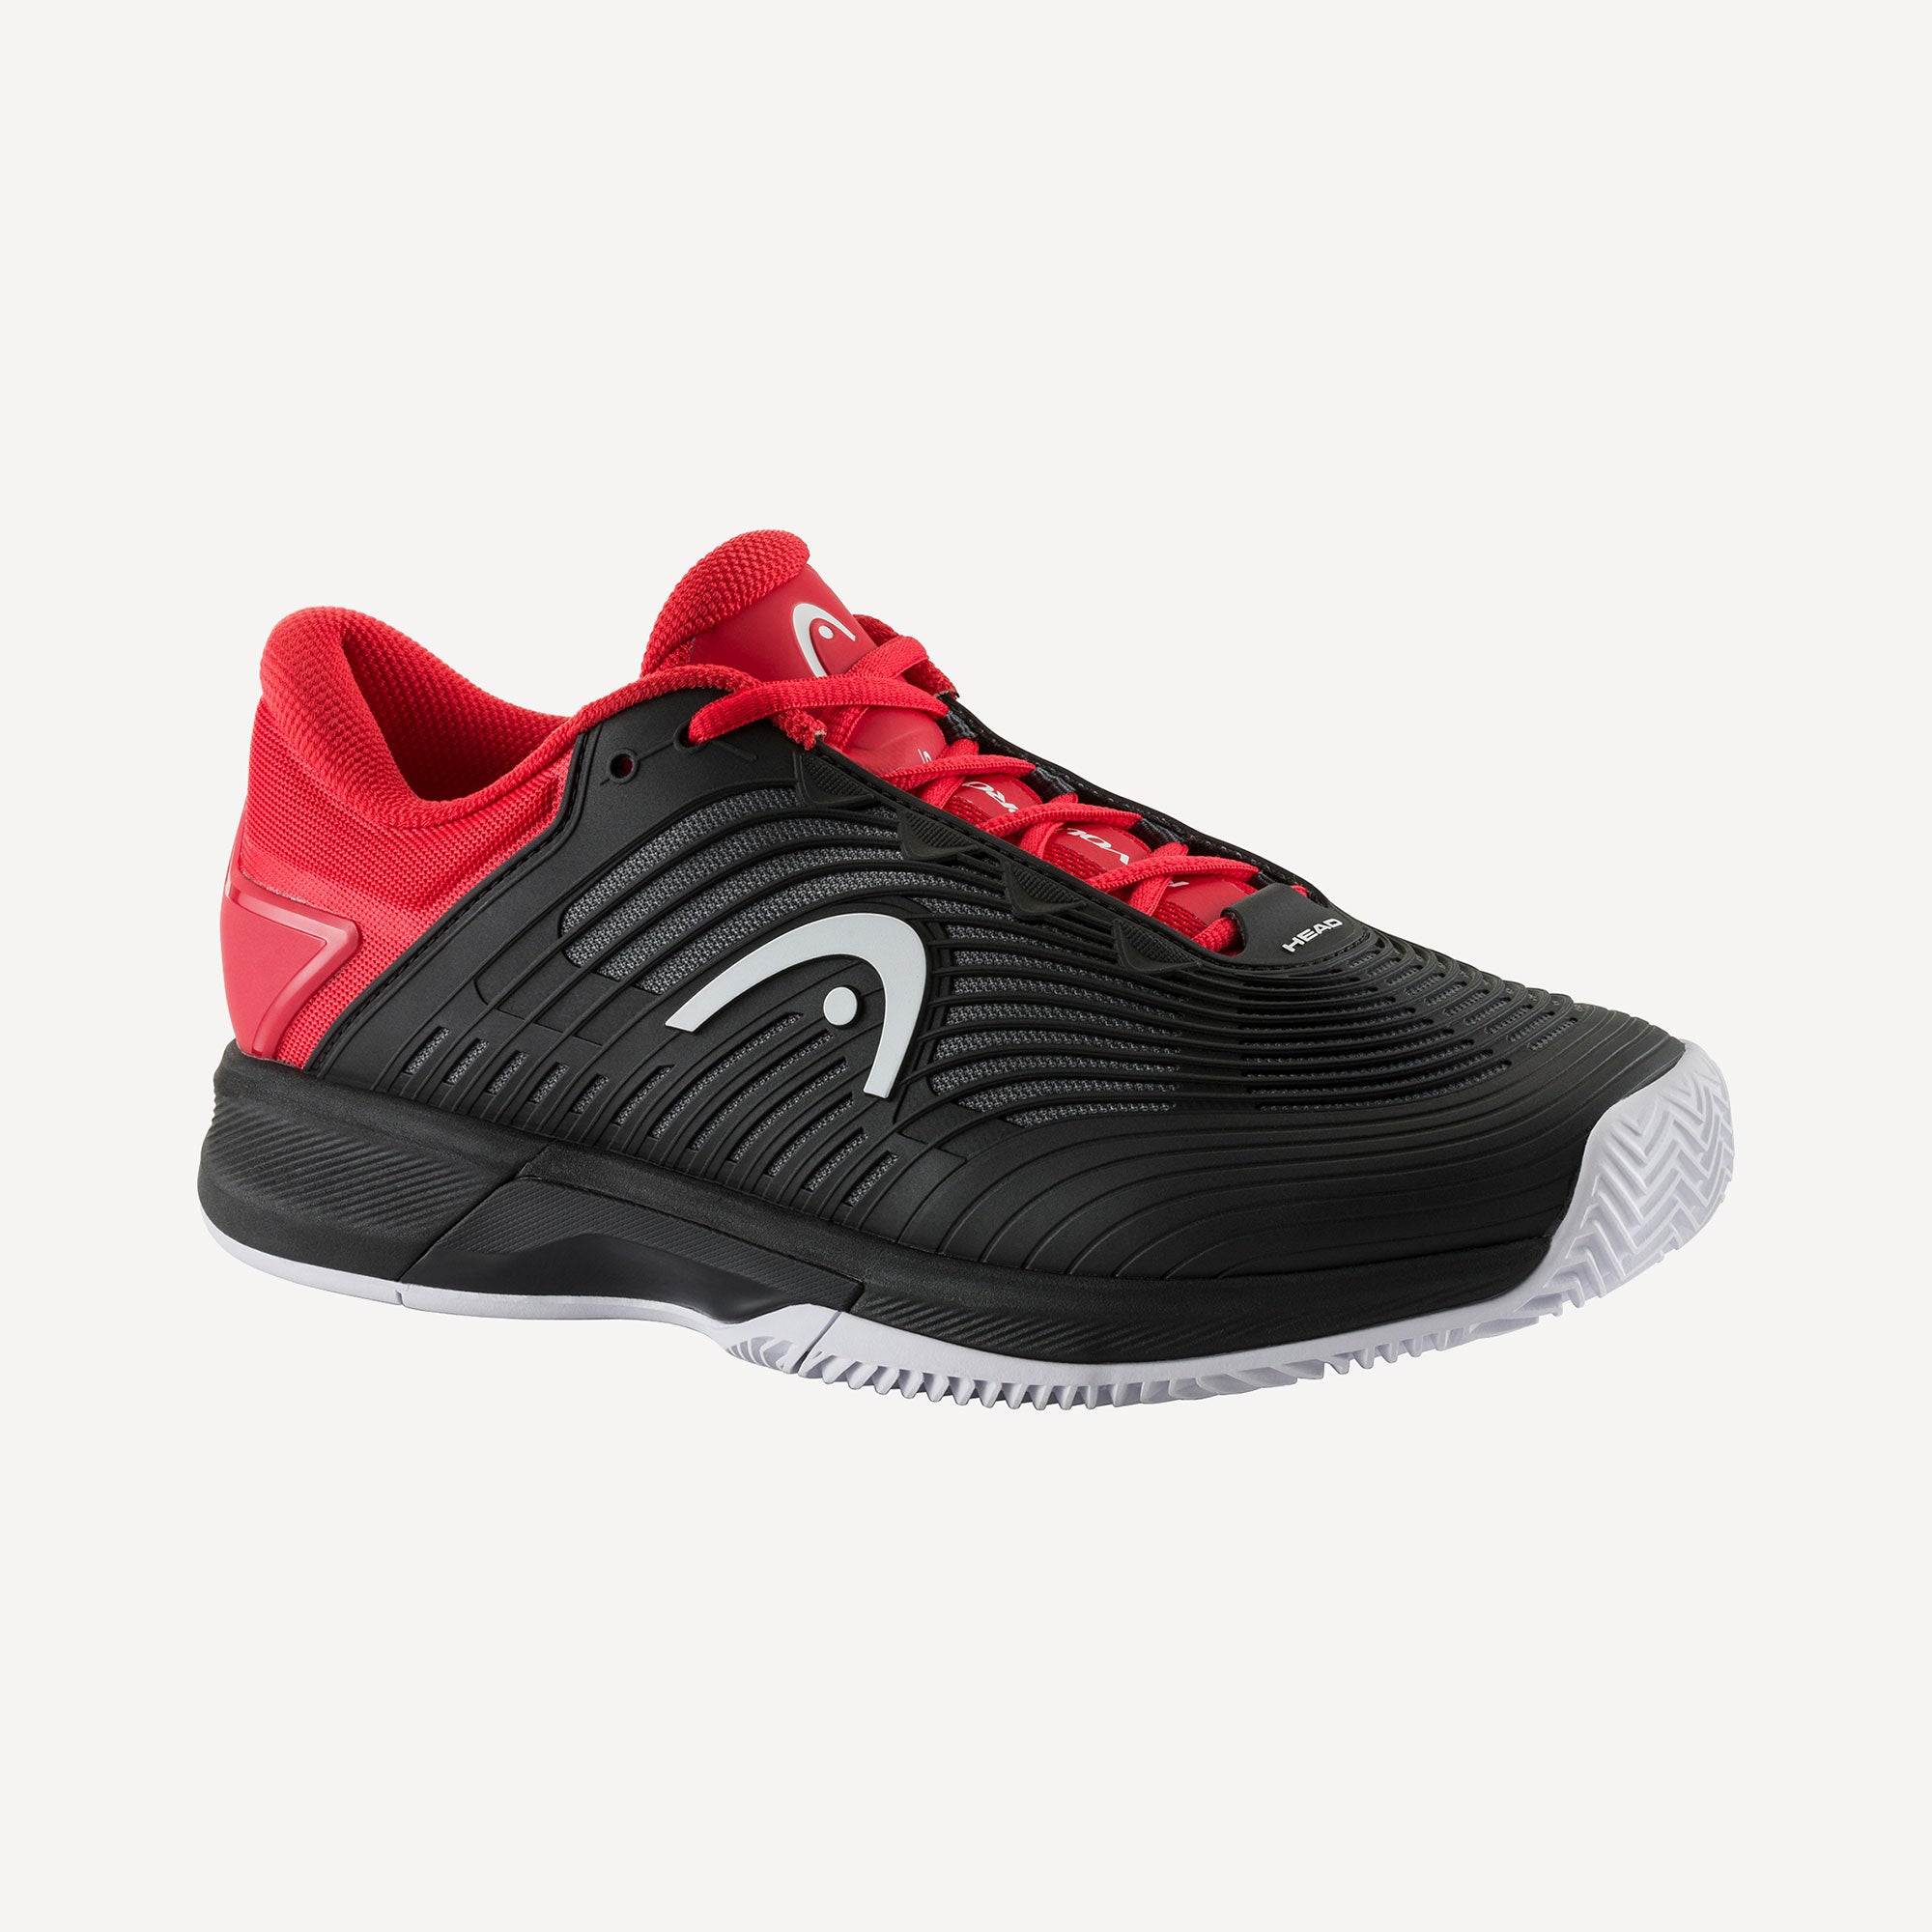 HEAD Revolt Pro 4.5 Men's Clay Court Tennis Shoes - Black/Red (1)